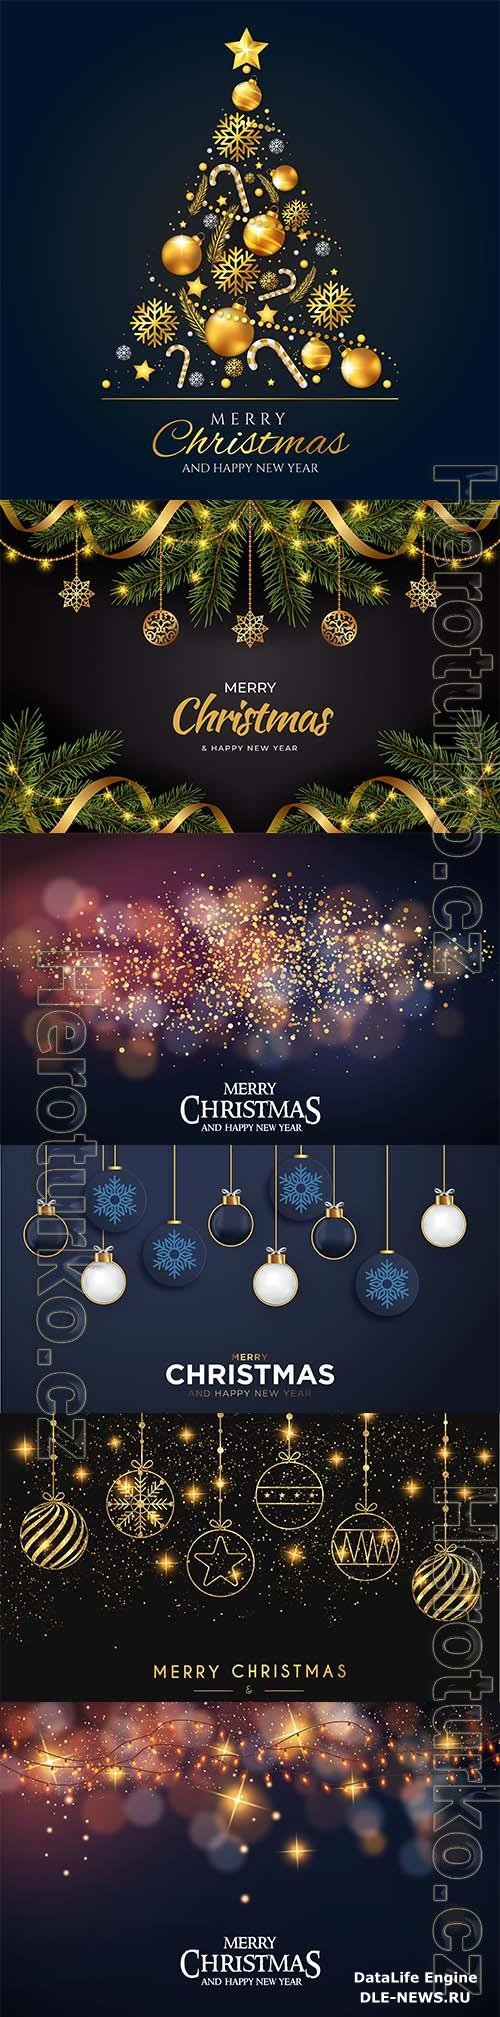 Elegant merry christmas vector background with golden balls